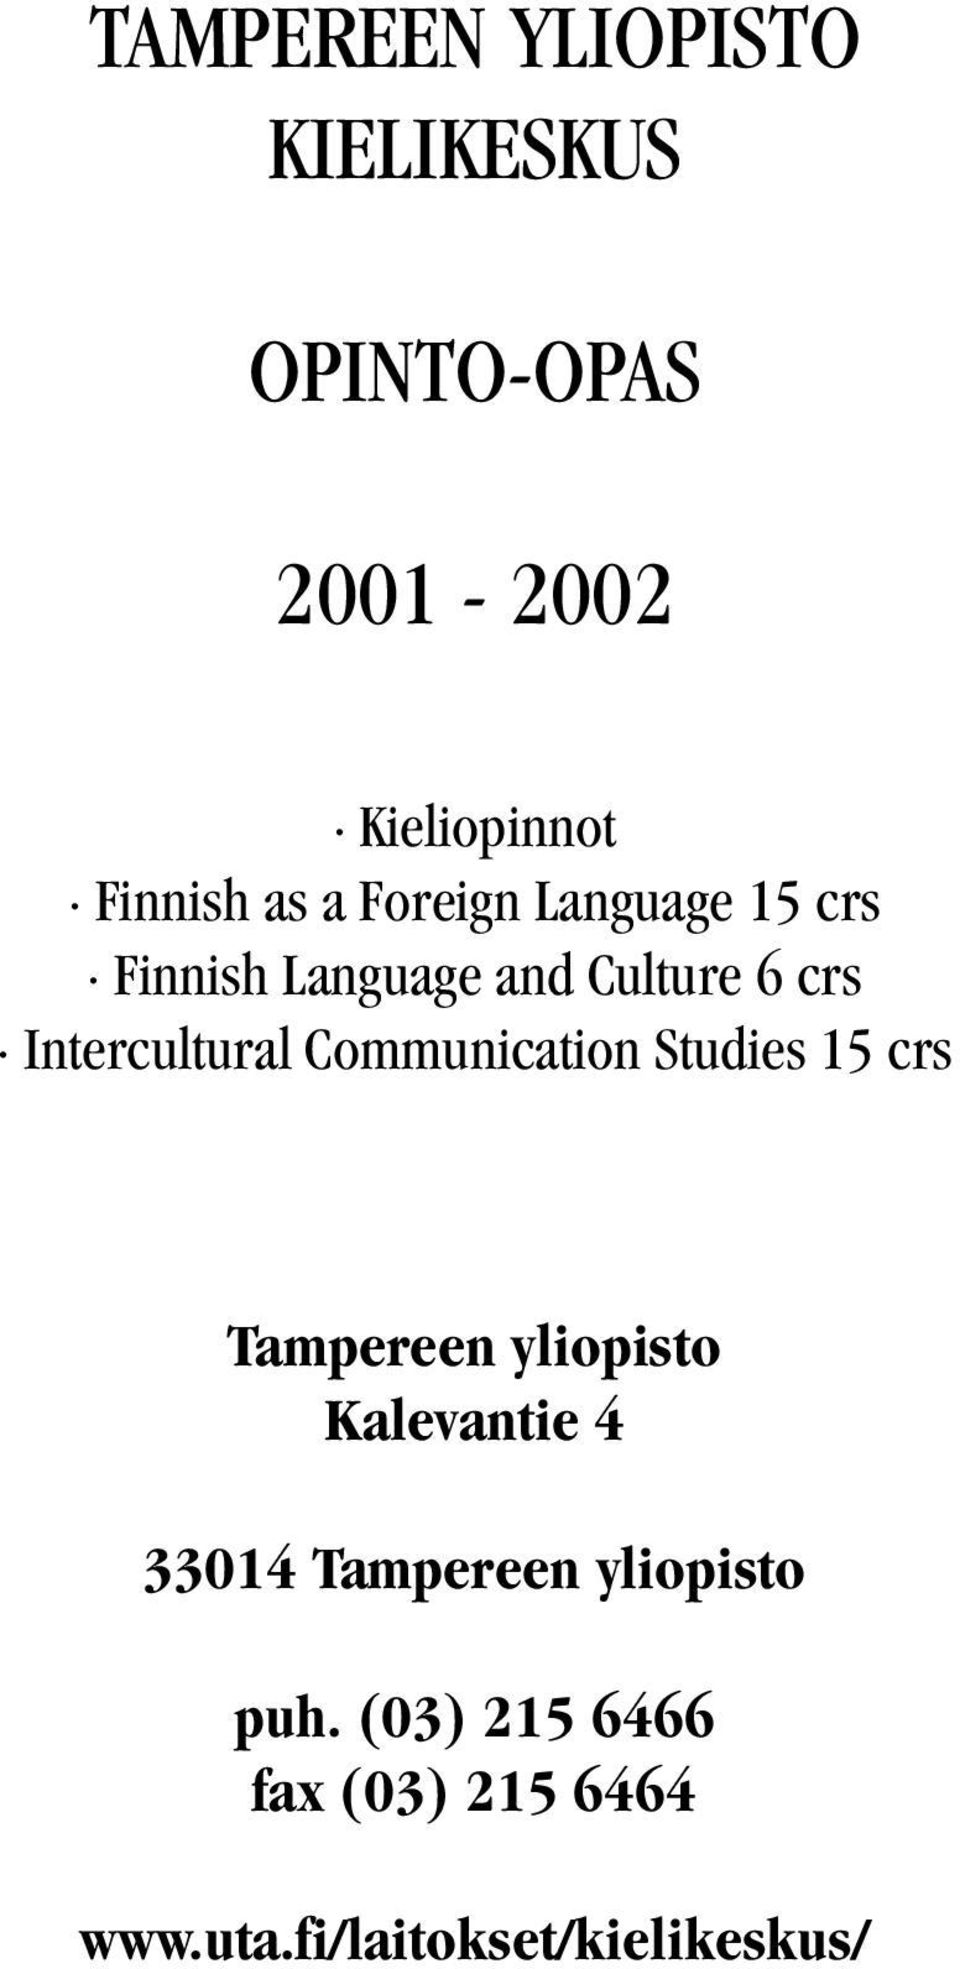 Communication Studies 15 crs Tampereen yliopisto Kalevantie 4 33014 Tampereen